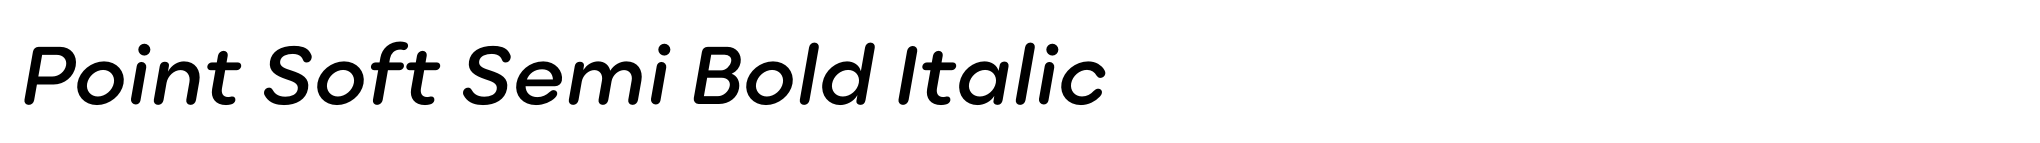 Point Soft Semi Bold Italic image